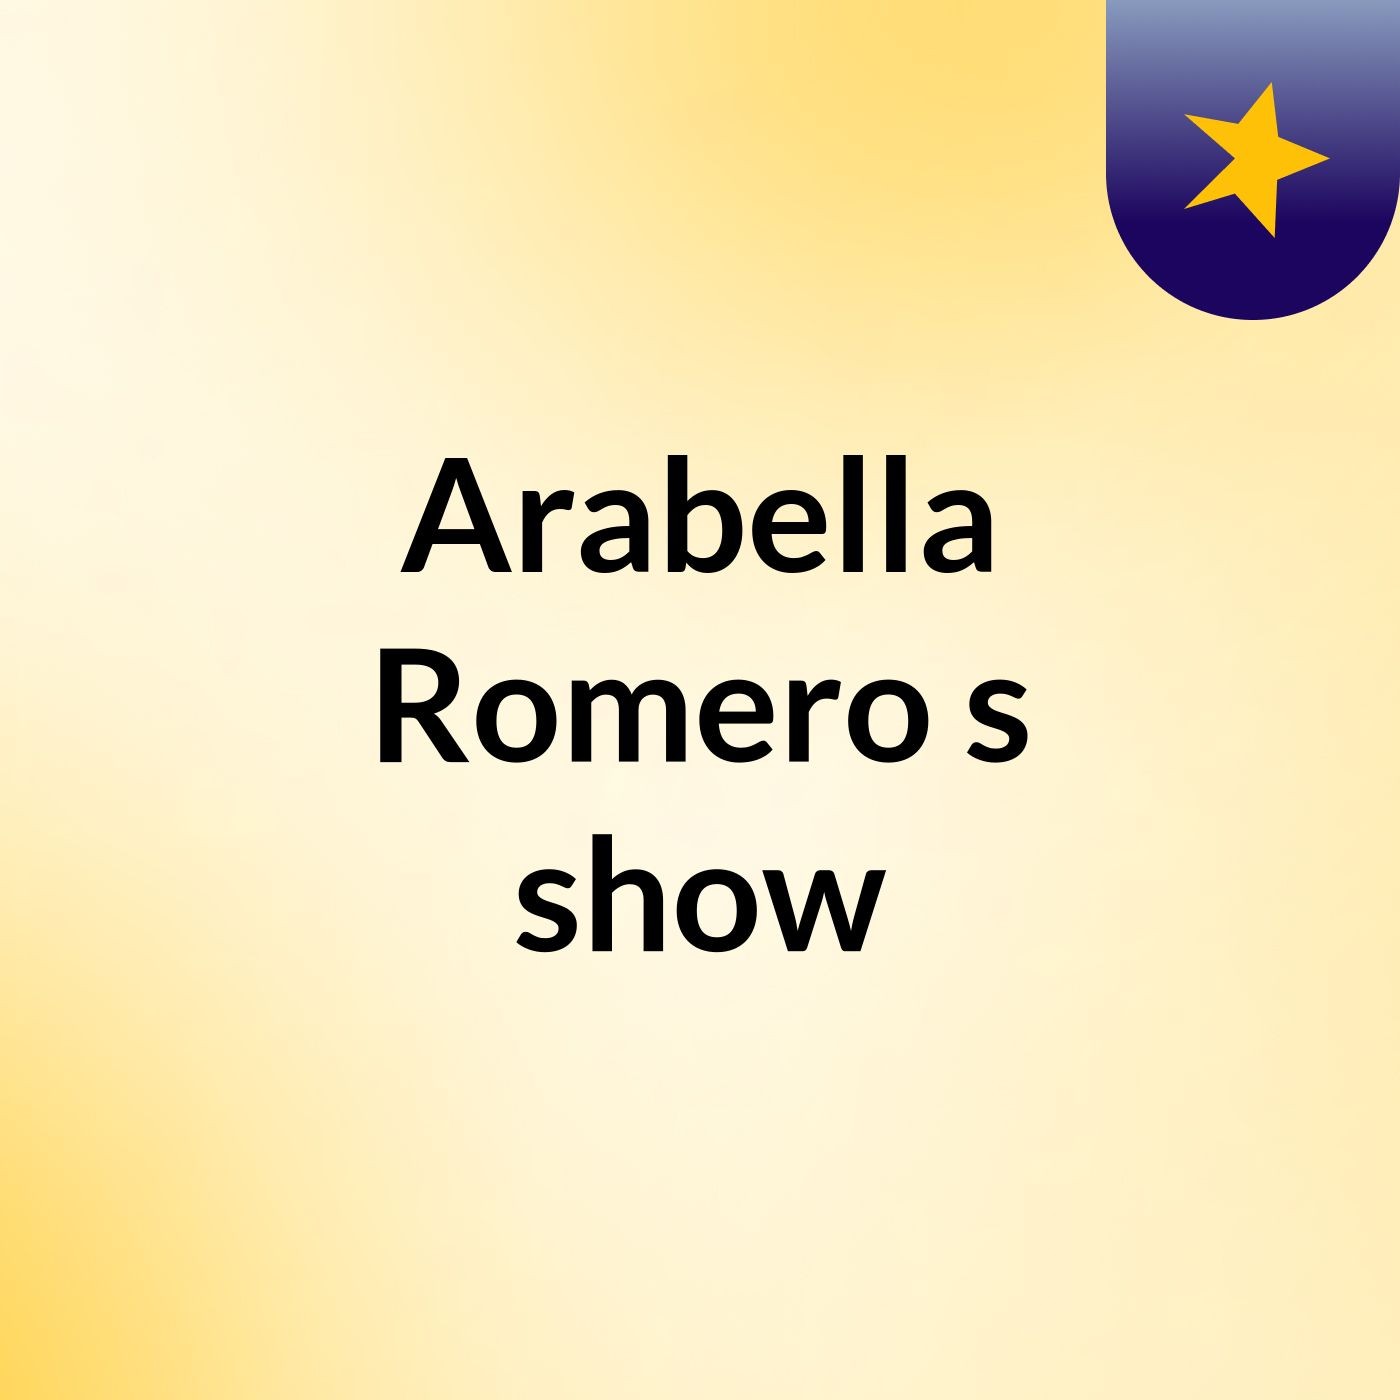 Arabella Romero's show